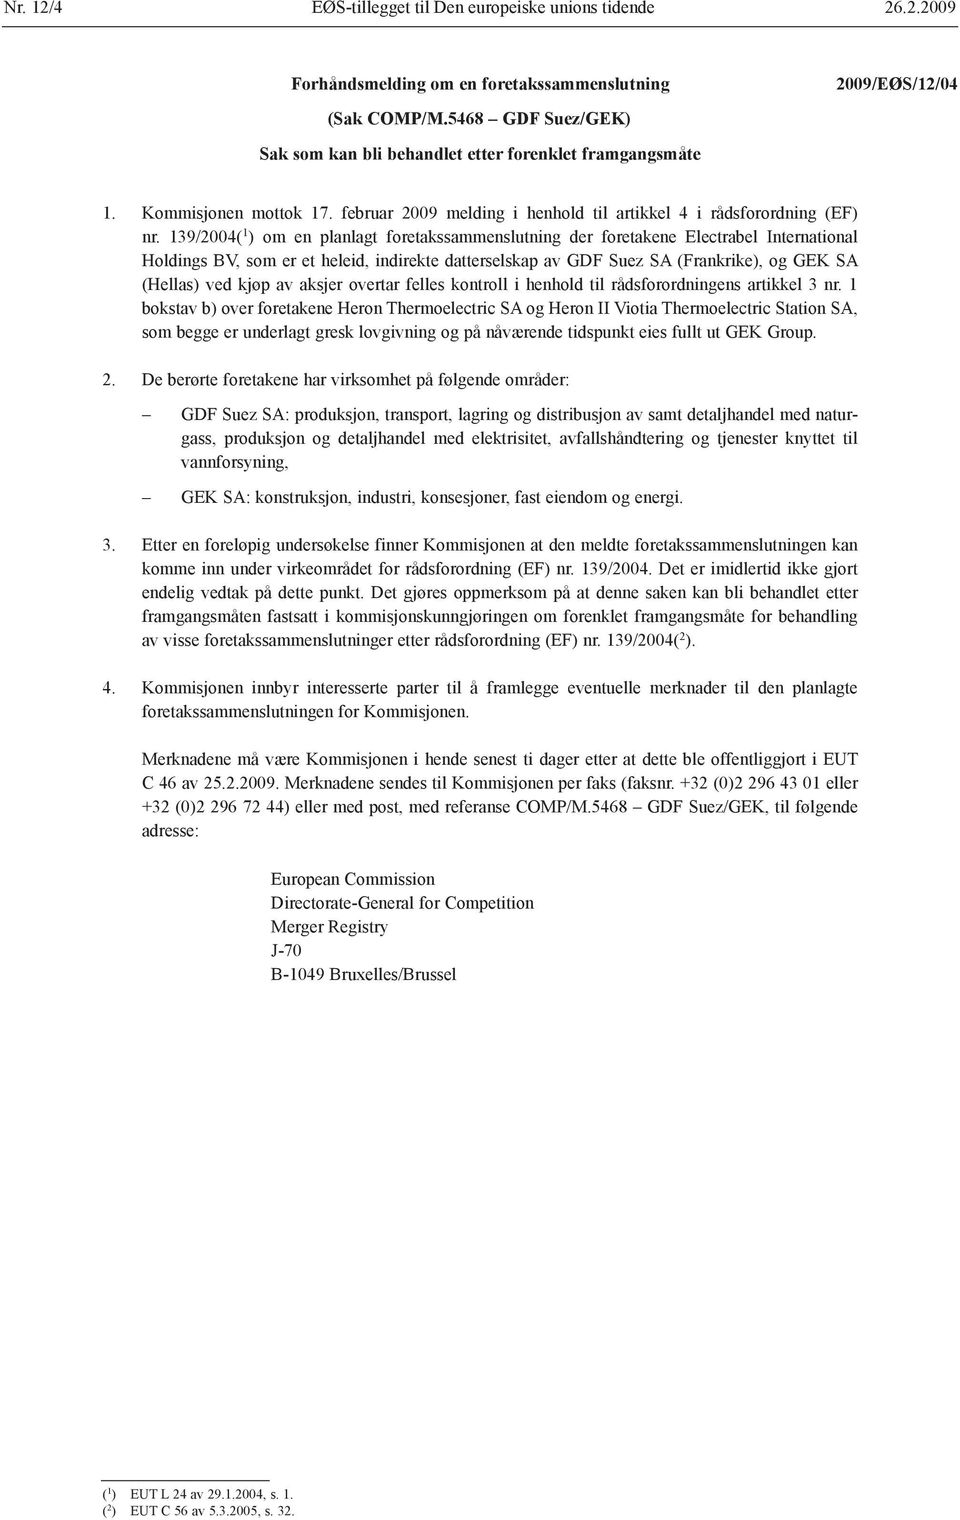 139/2004( 1 ) om en planlagt foretakssammenslutning der foretakene Electrabel International Holdings BV, som er et heleid, indirekte datterselskap av GDF Suez SA (Frankrike), og GEK SA (Hellas) ved